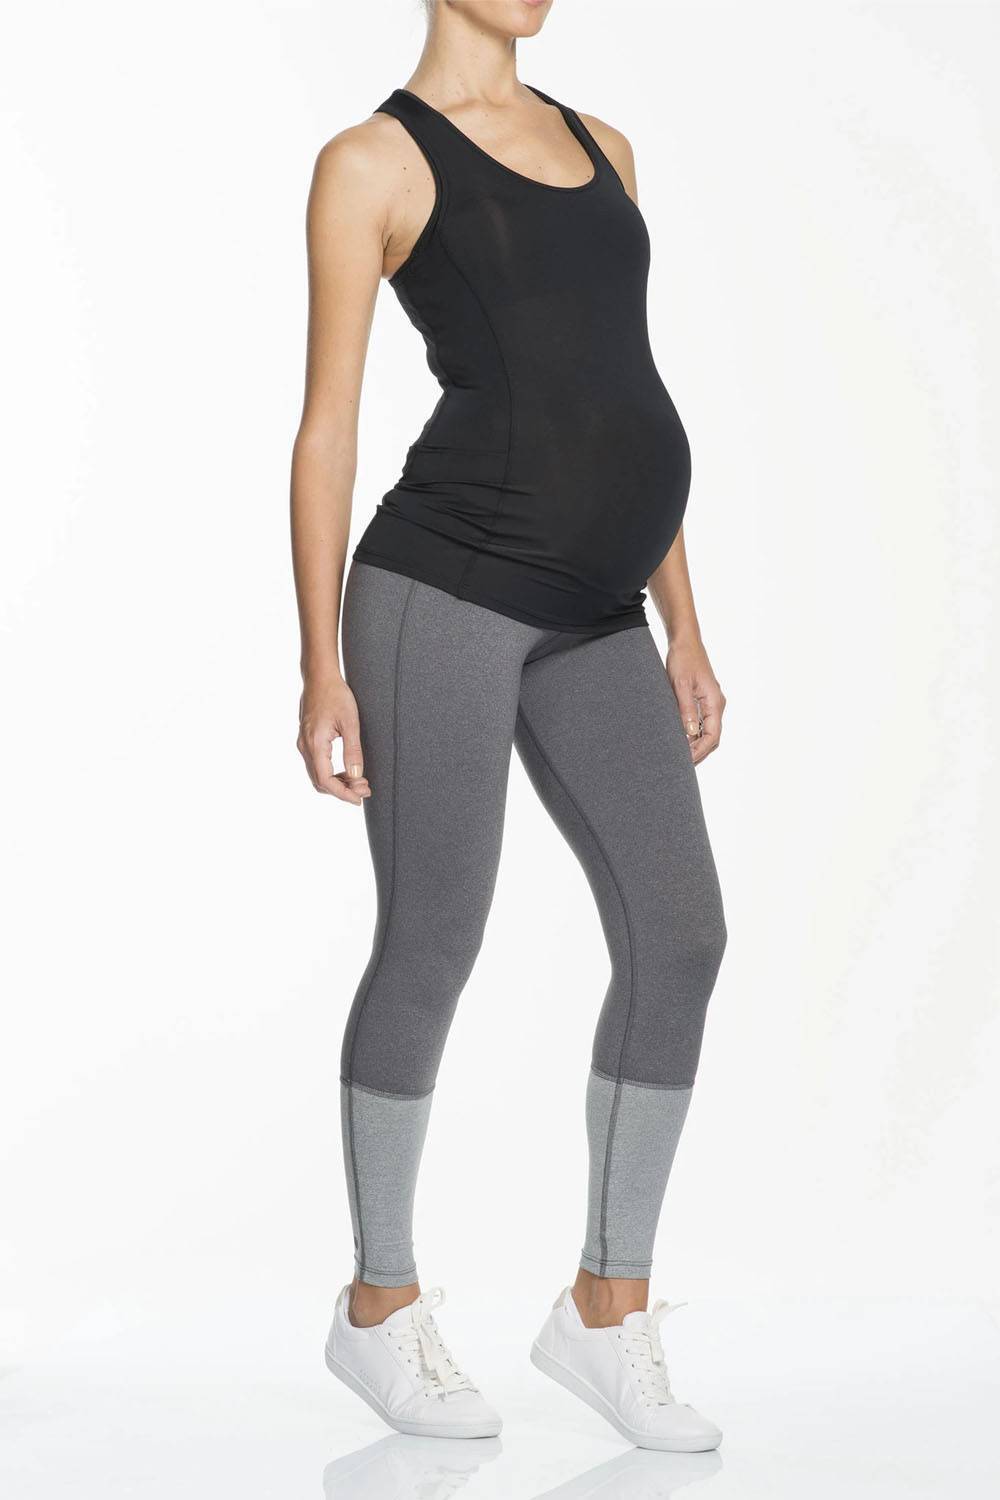 ten active eco-friendly maternity leggings